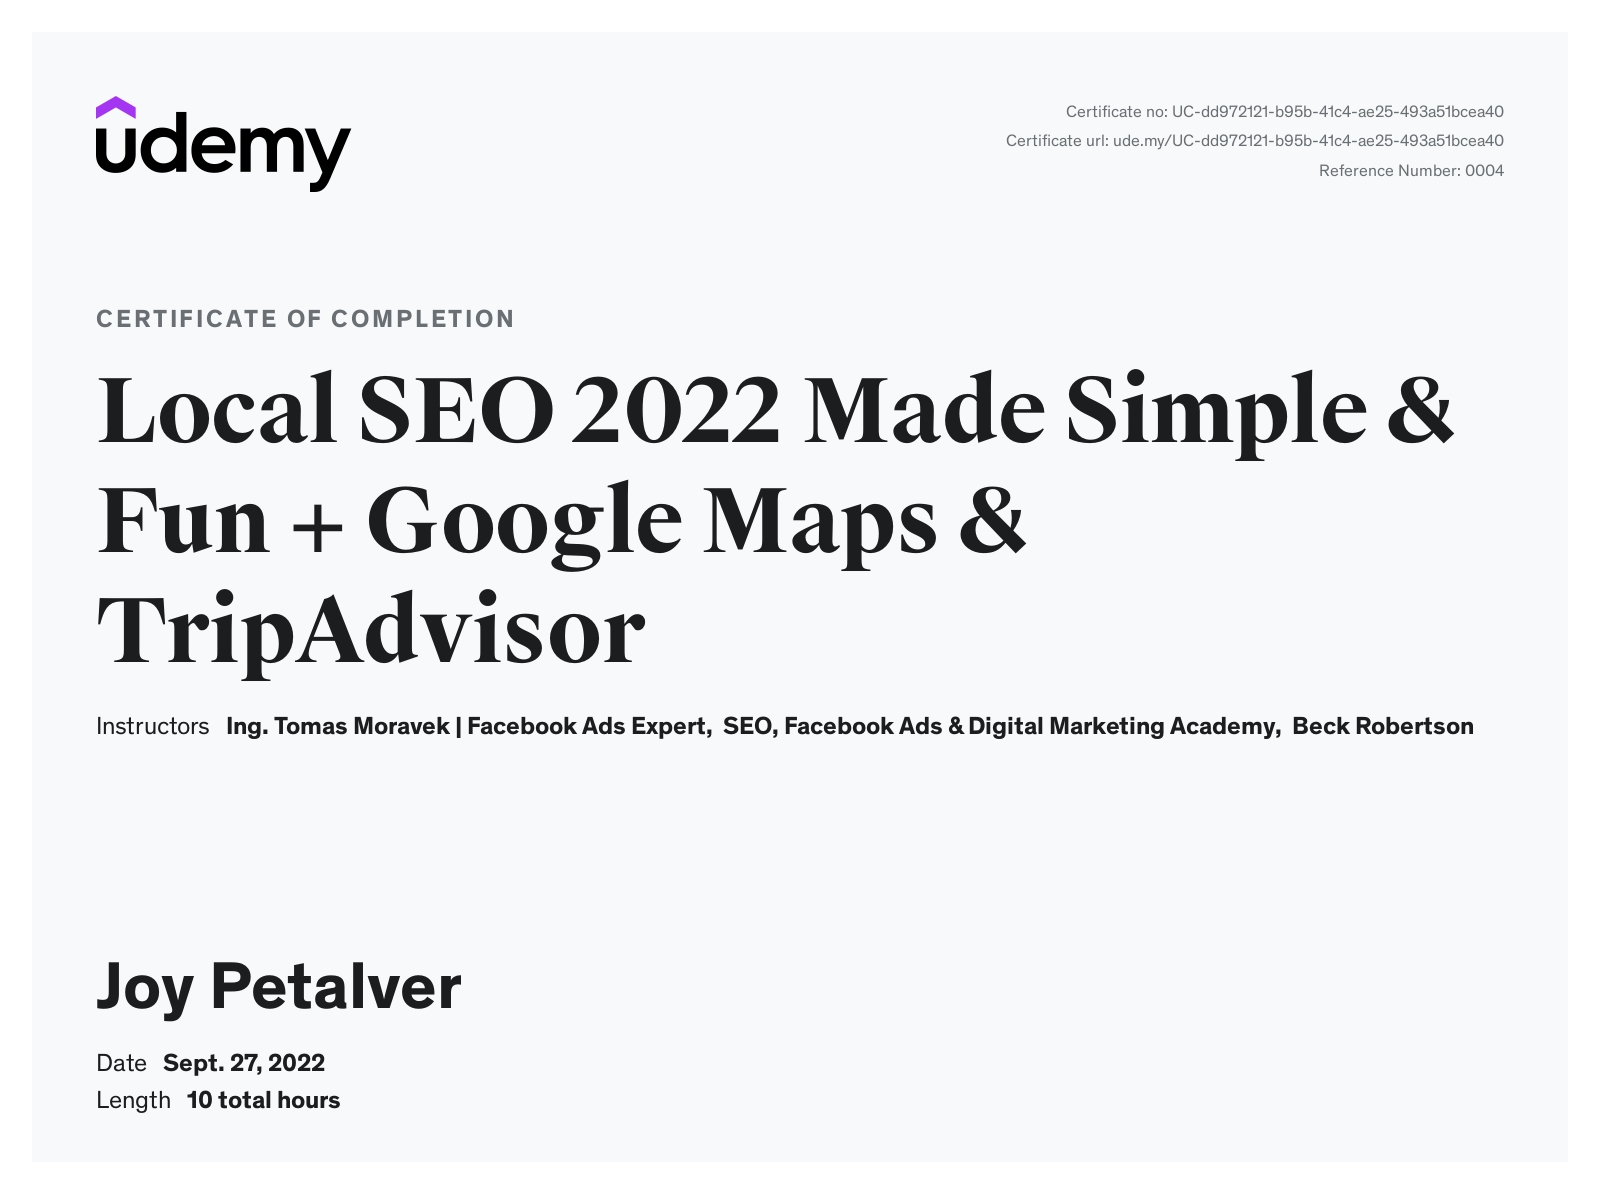 Local SEO 2022 Made Simple & Fun + Google Maps and Trip Advisor